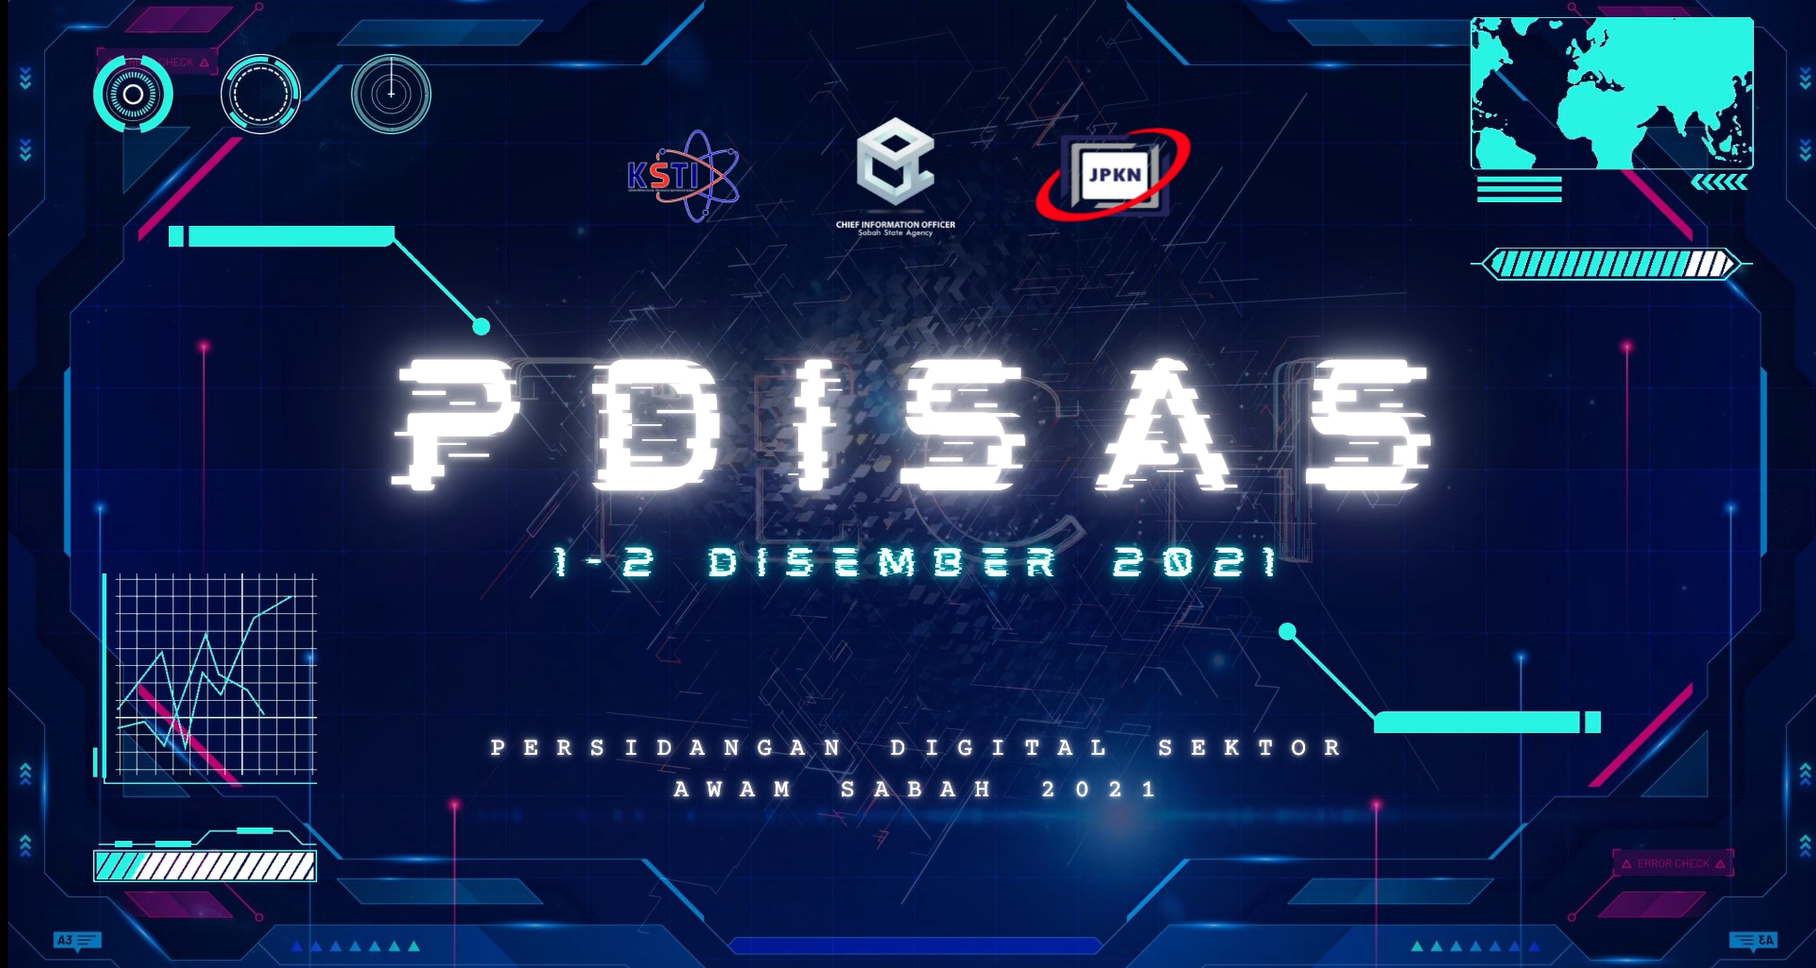 PERSIDANGAN DIGITAL SEKTOR AWAM SABAH (PDISAS) 2021 